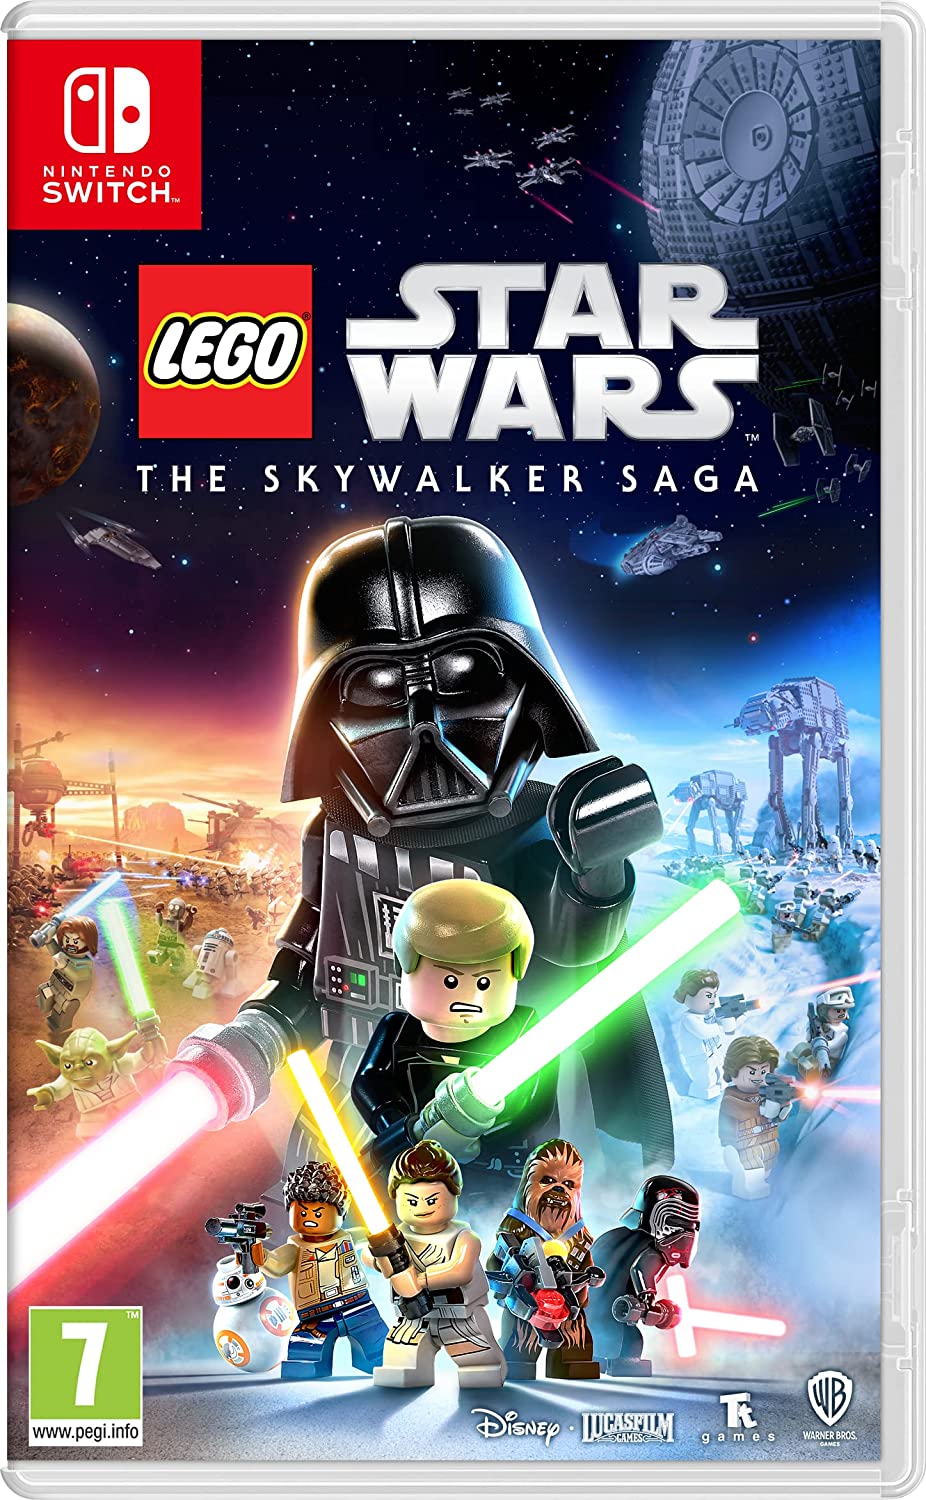 LEGO Star Wars for Nintendo Switch.